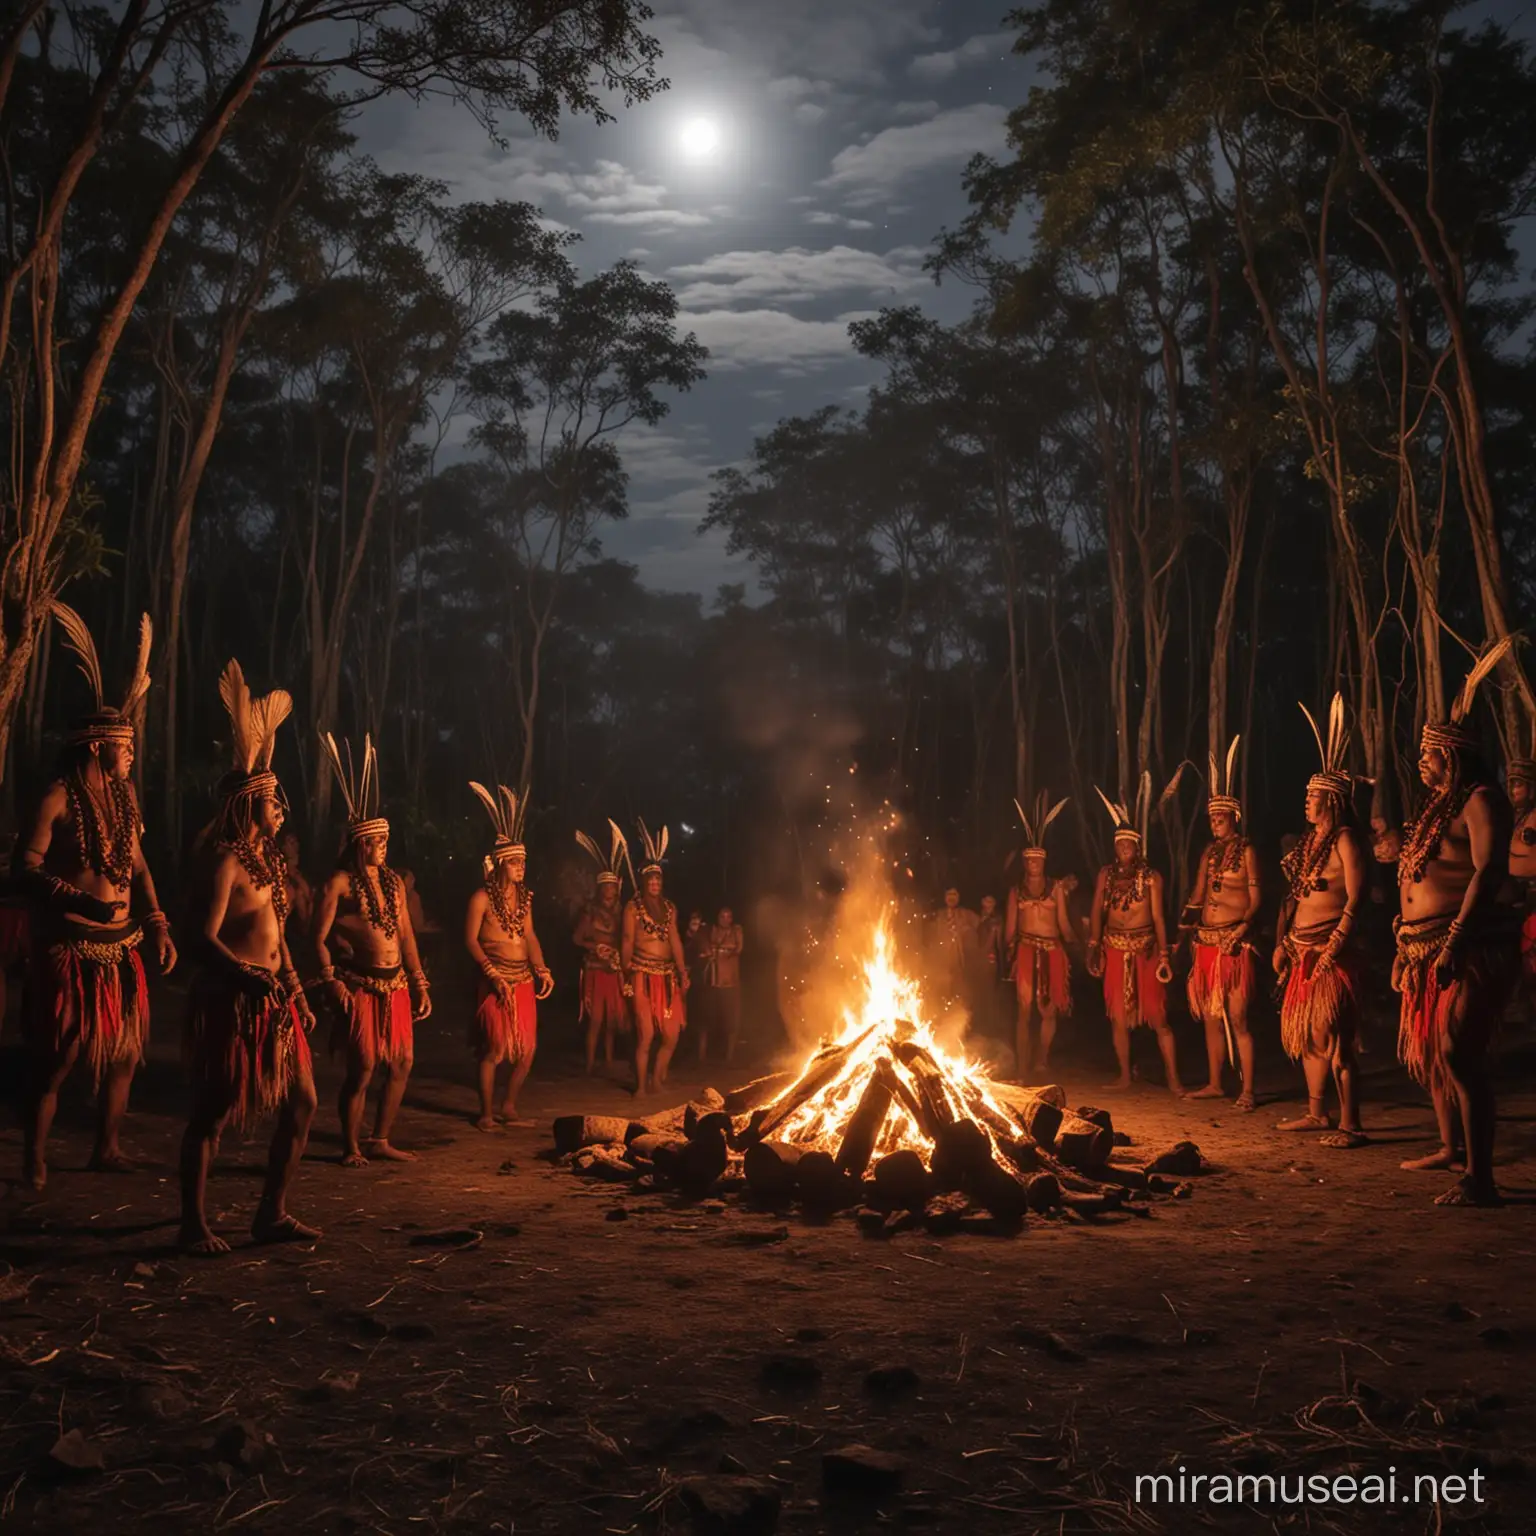 Huli Tribe Dancing Ritual by Moonlight